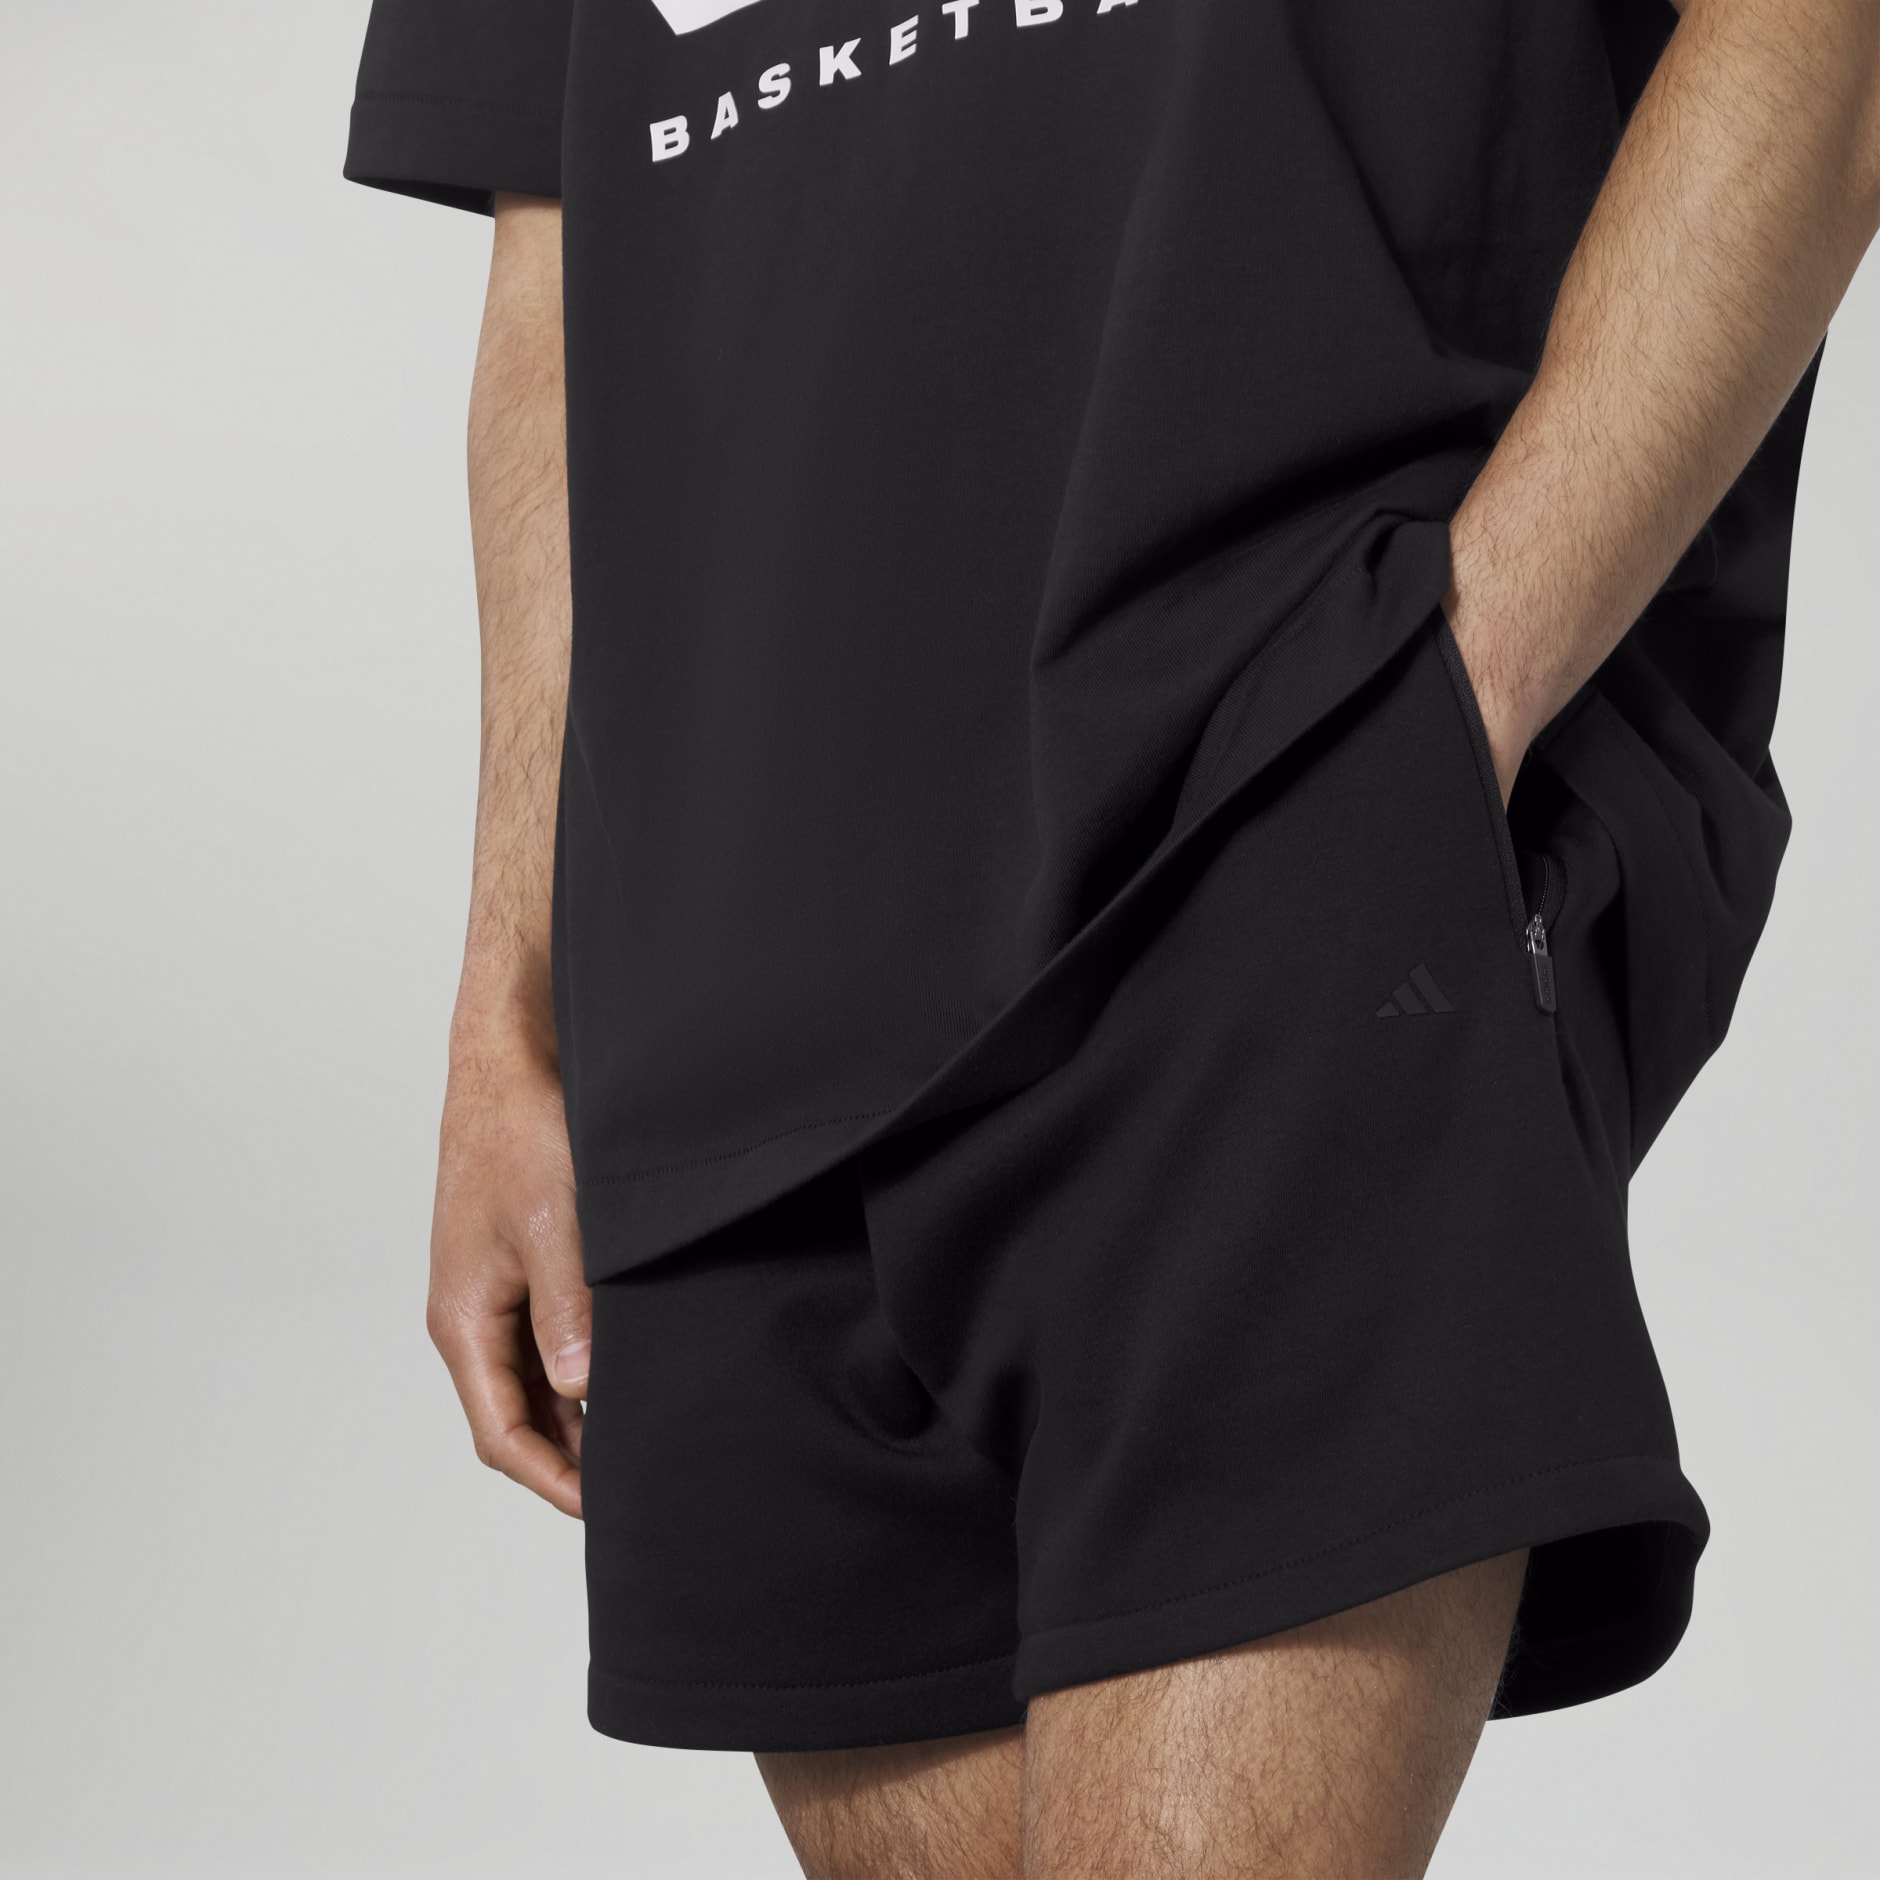 Clothing - adidas Basketball Shorts - Black | adidas South Africa